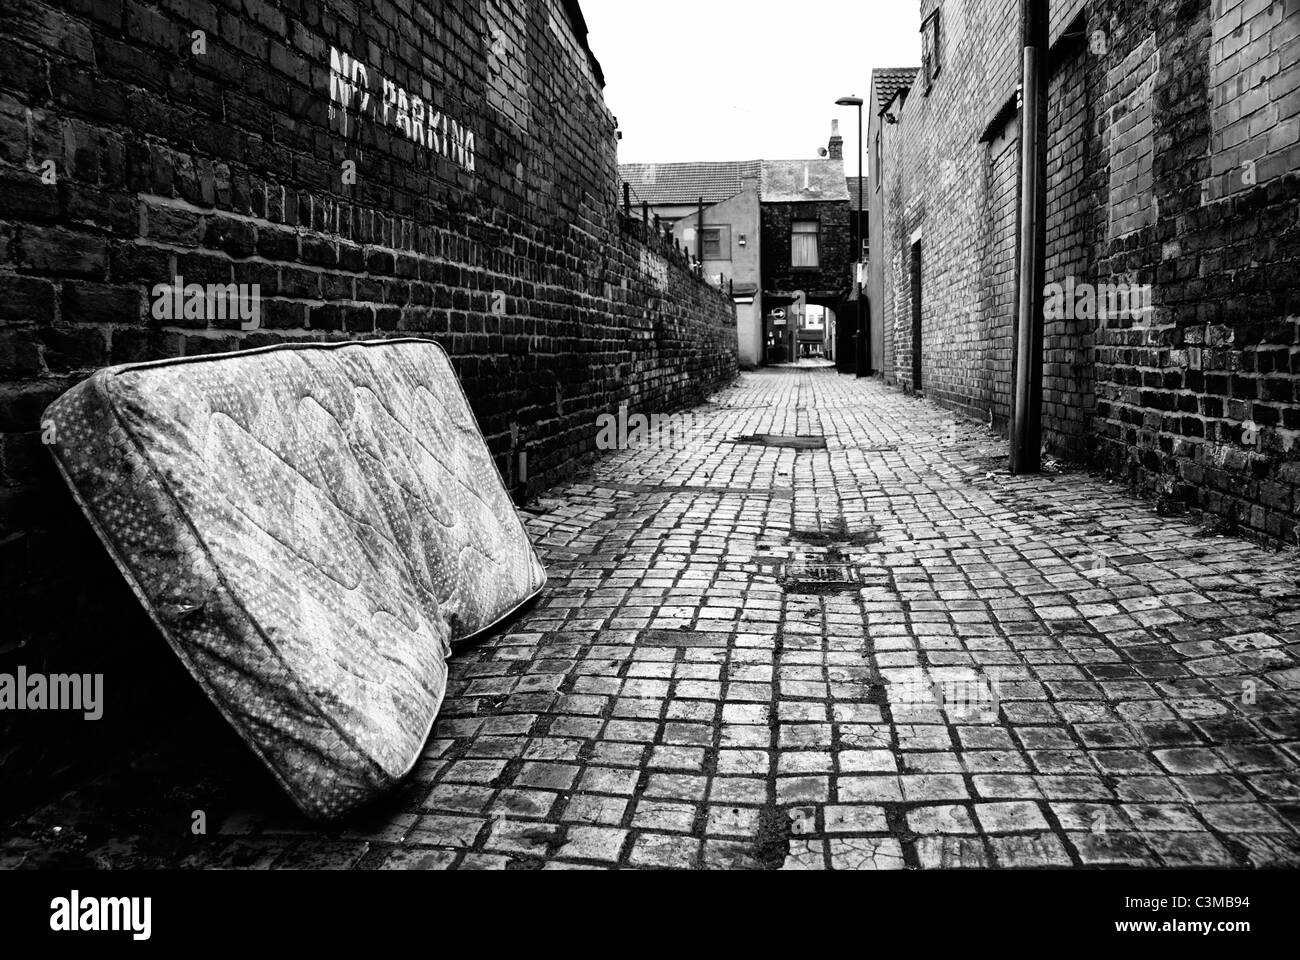 Urban Black and White Stock Photos & Images - Alamy